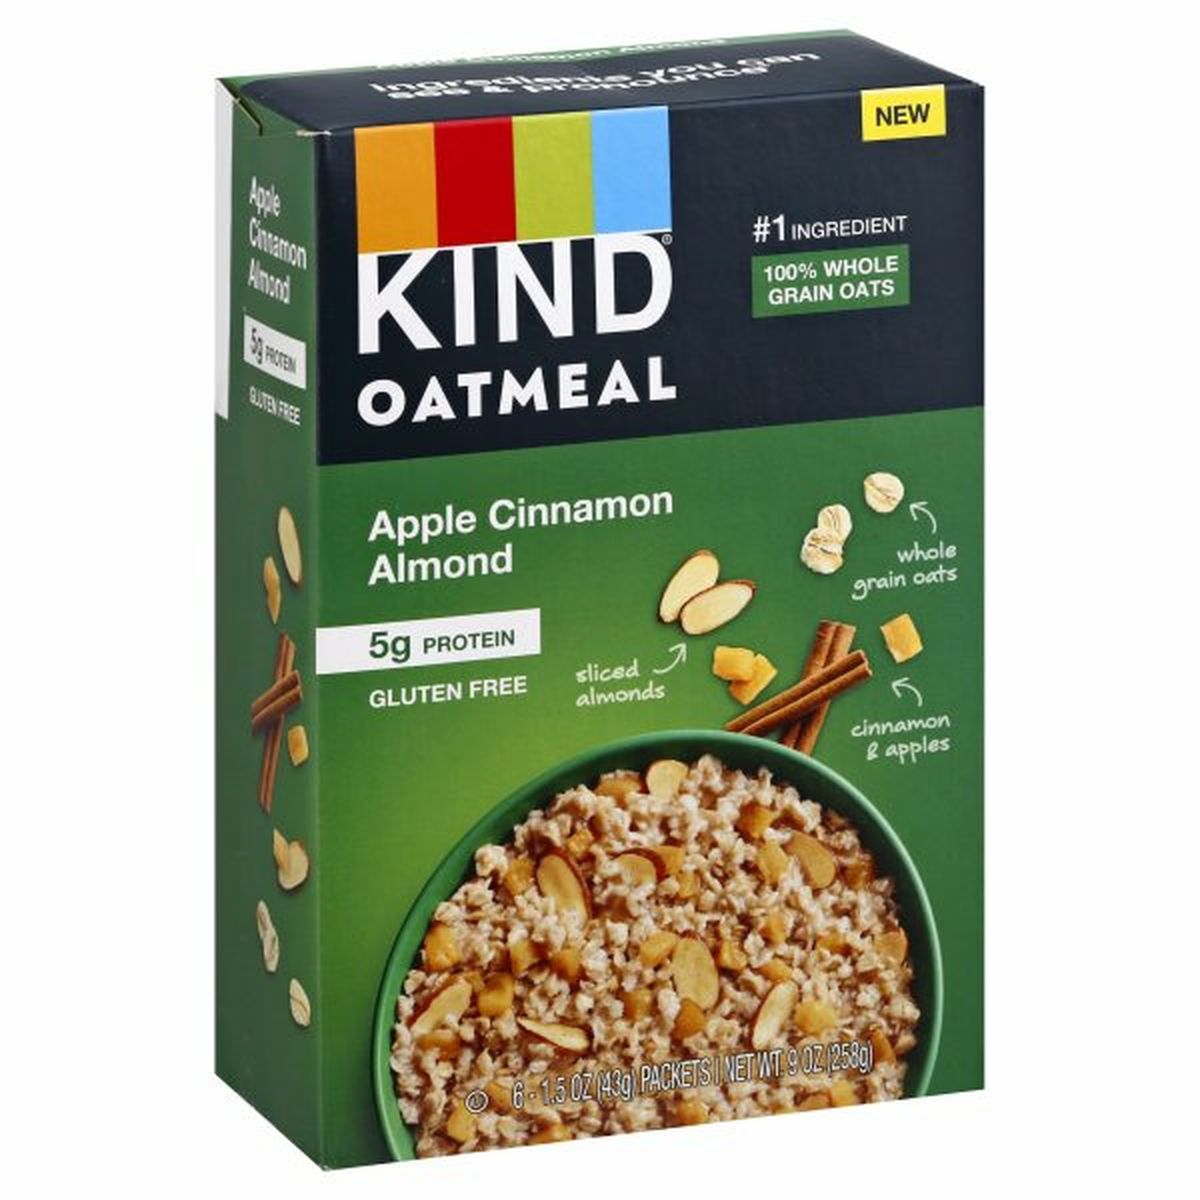 Calories in KIND Oatmeal Oatmeal, Apple Cinnamon Almond